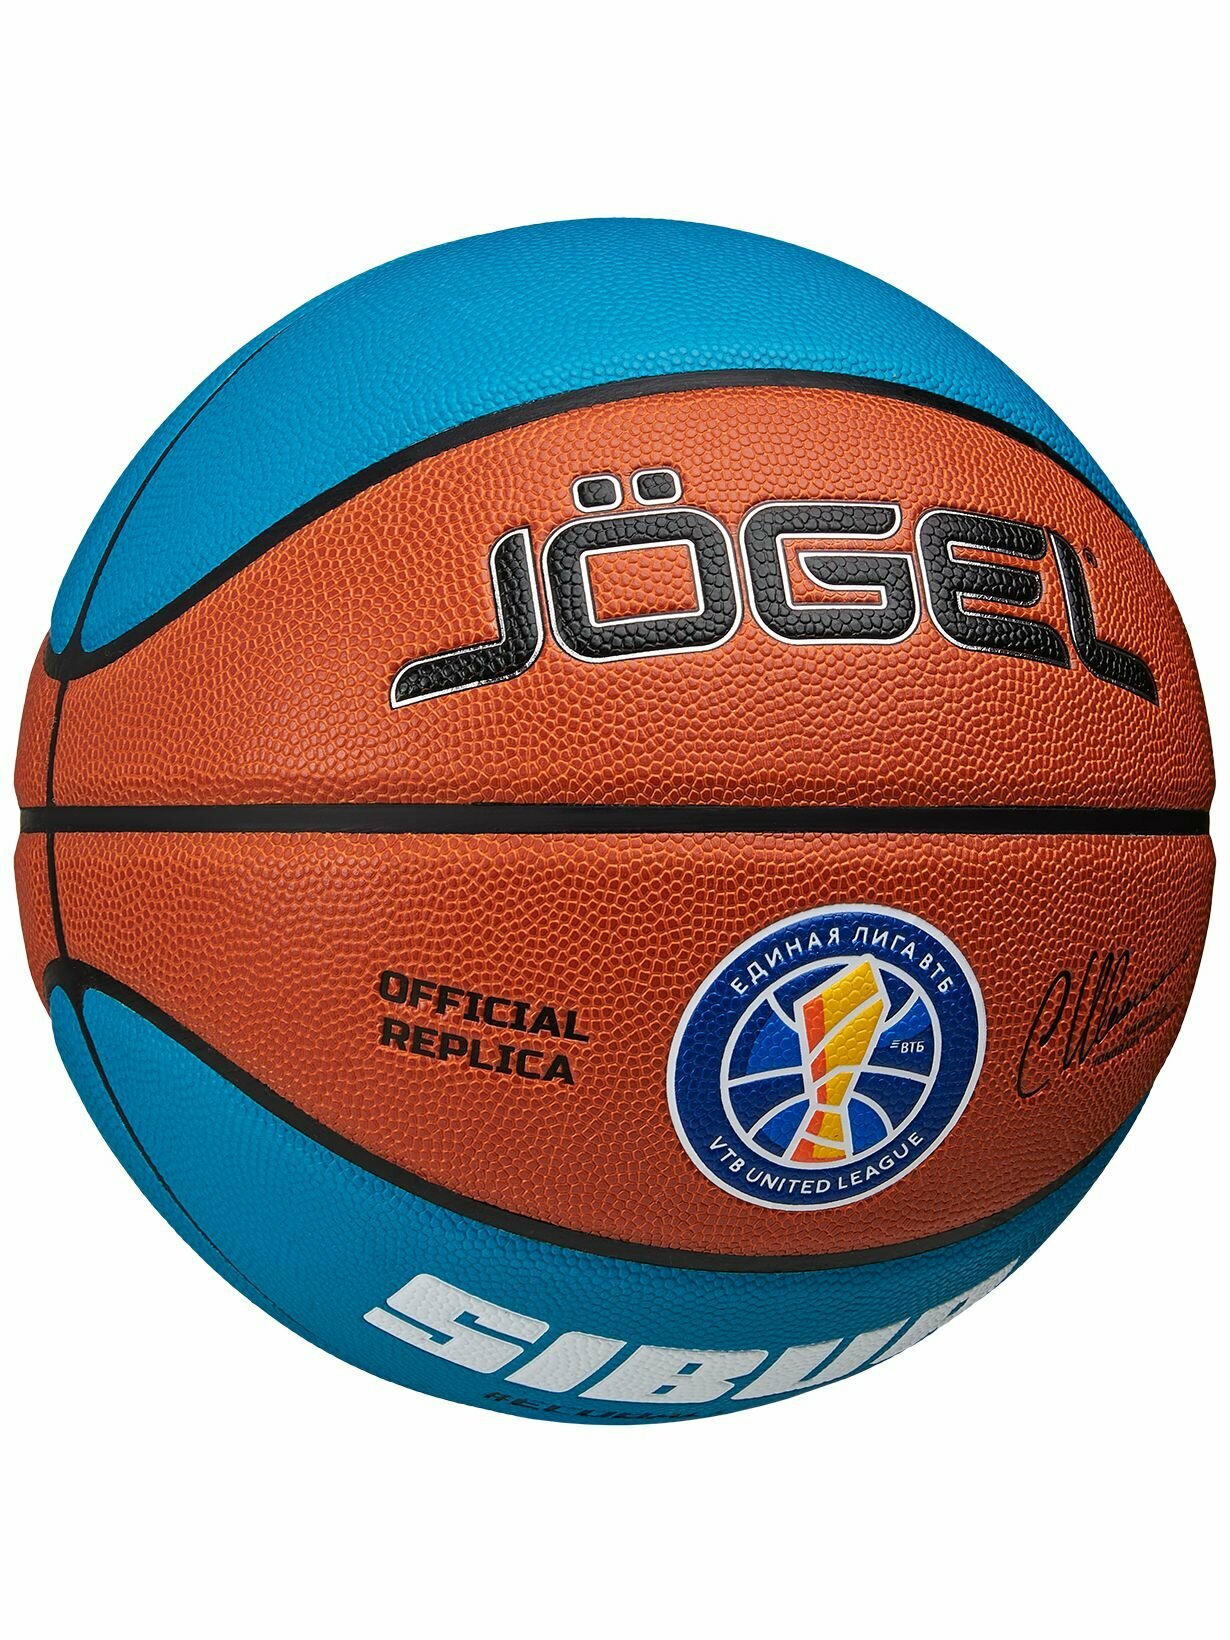 Баскетбольный мяч Pro Training ECOBALL 2.0 Replica размер №7